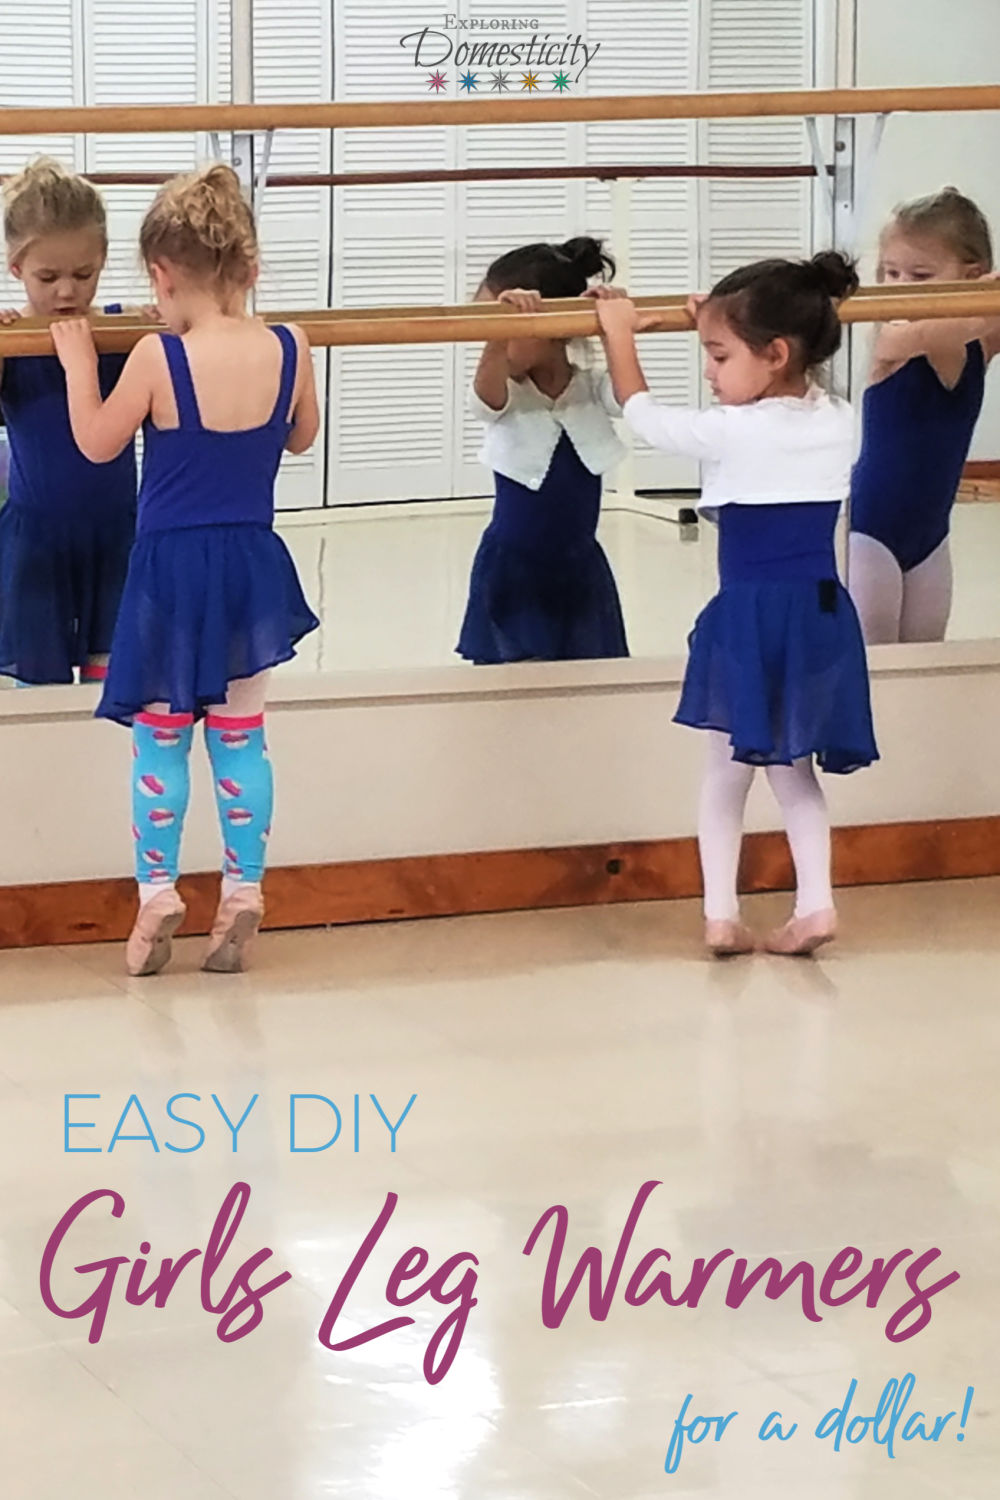 Kids Girls Leg Warmers Plain Glittery Footless 80s Dance Ballet Fancy Dress